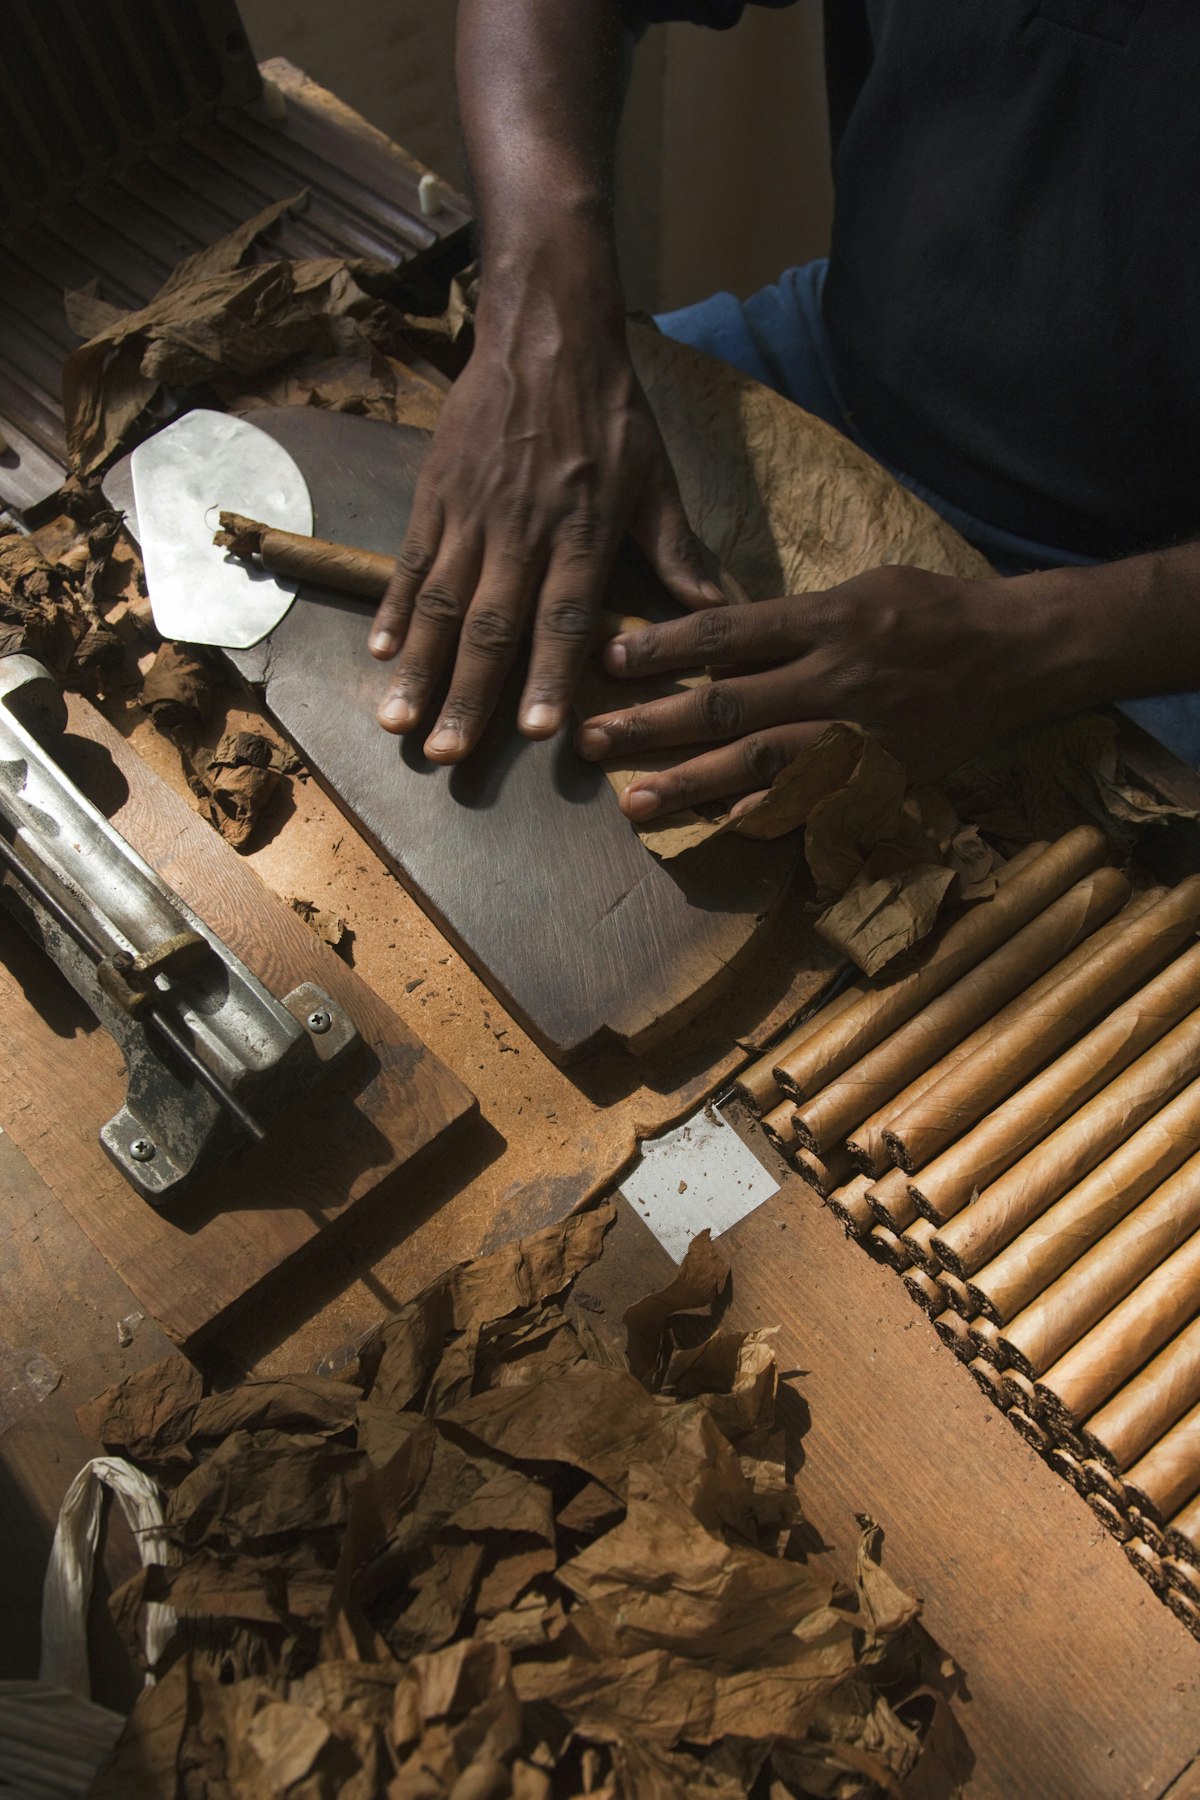 Cohiba cigars made by hand at the Boutique del Fumador cigar factory, Santo Domingo, Zona Colonial, Dominican Republic